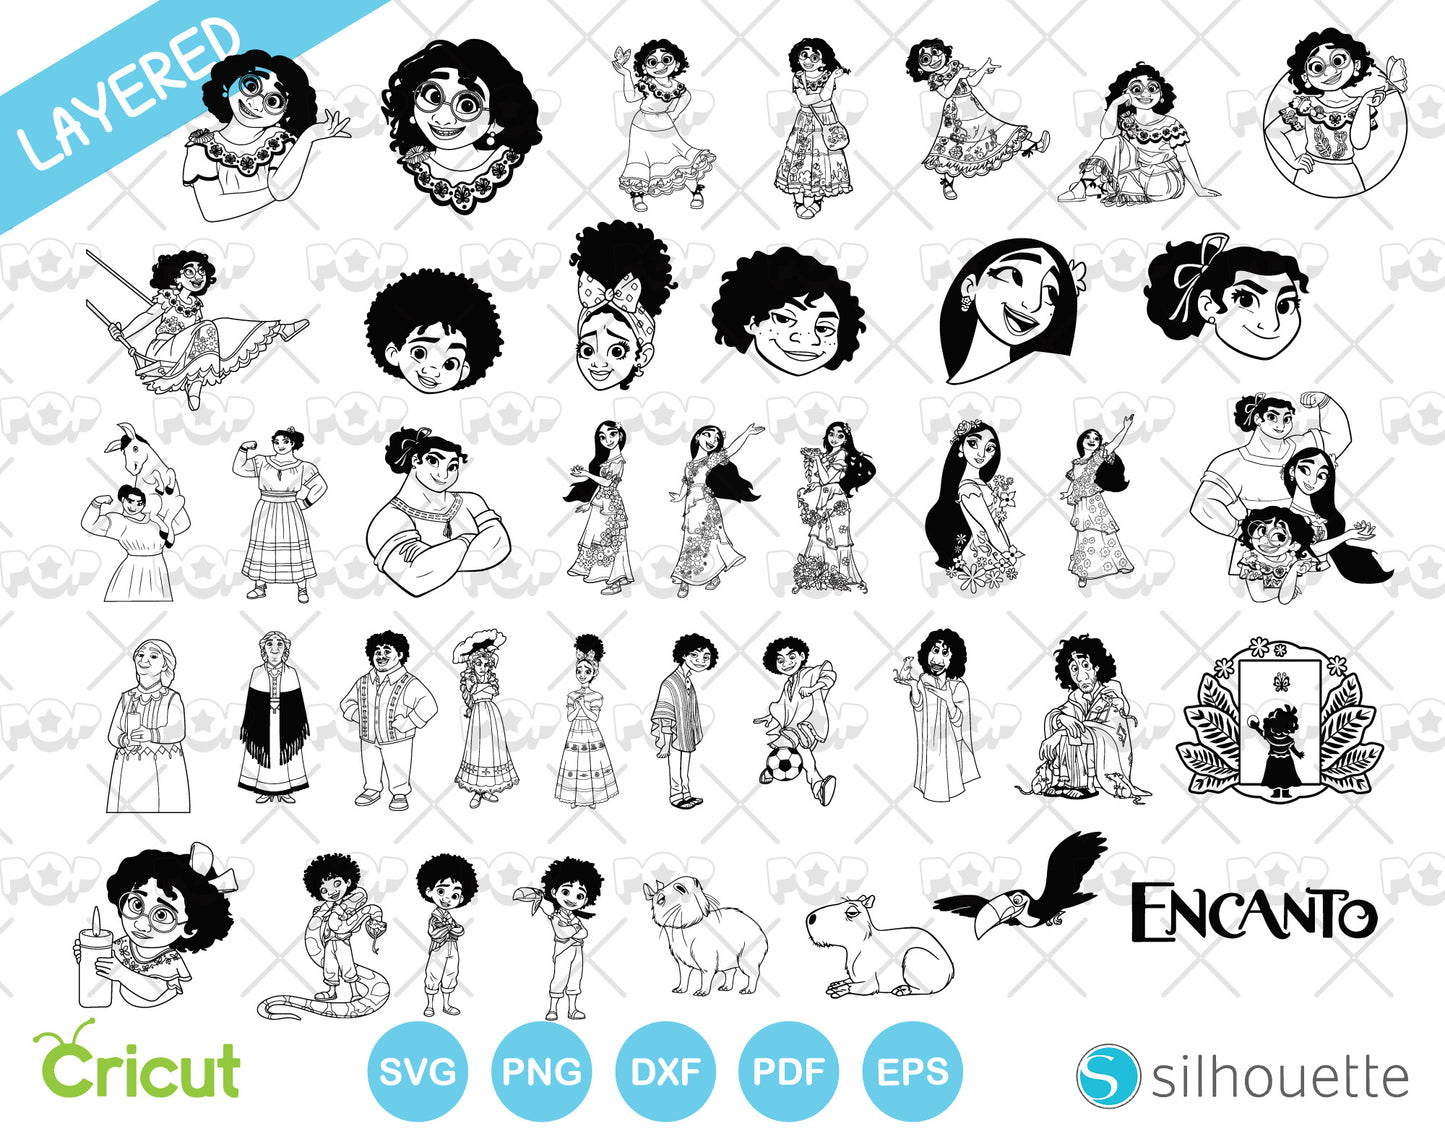 Disney Encanto 80 cliparts bundle, SVG cutting files for cricut silhouette, SVG, PNG, DXF, instant download